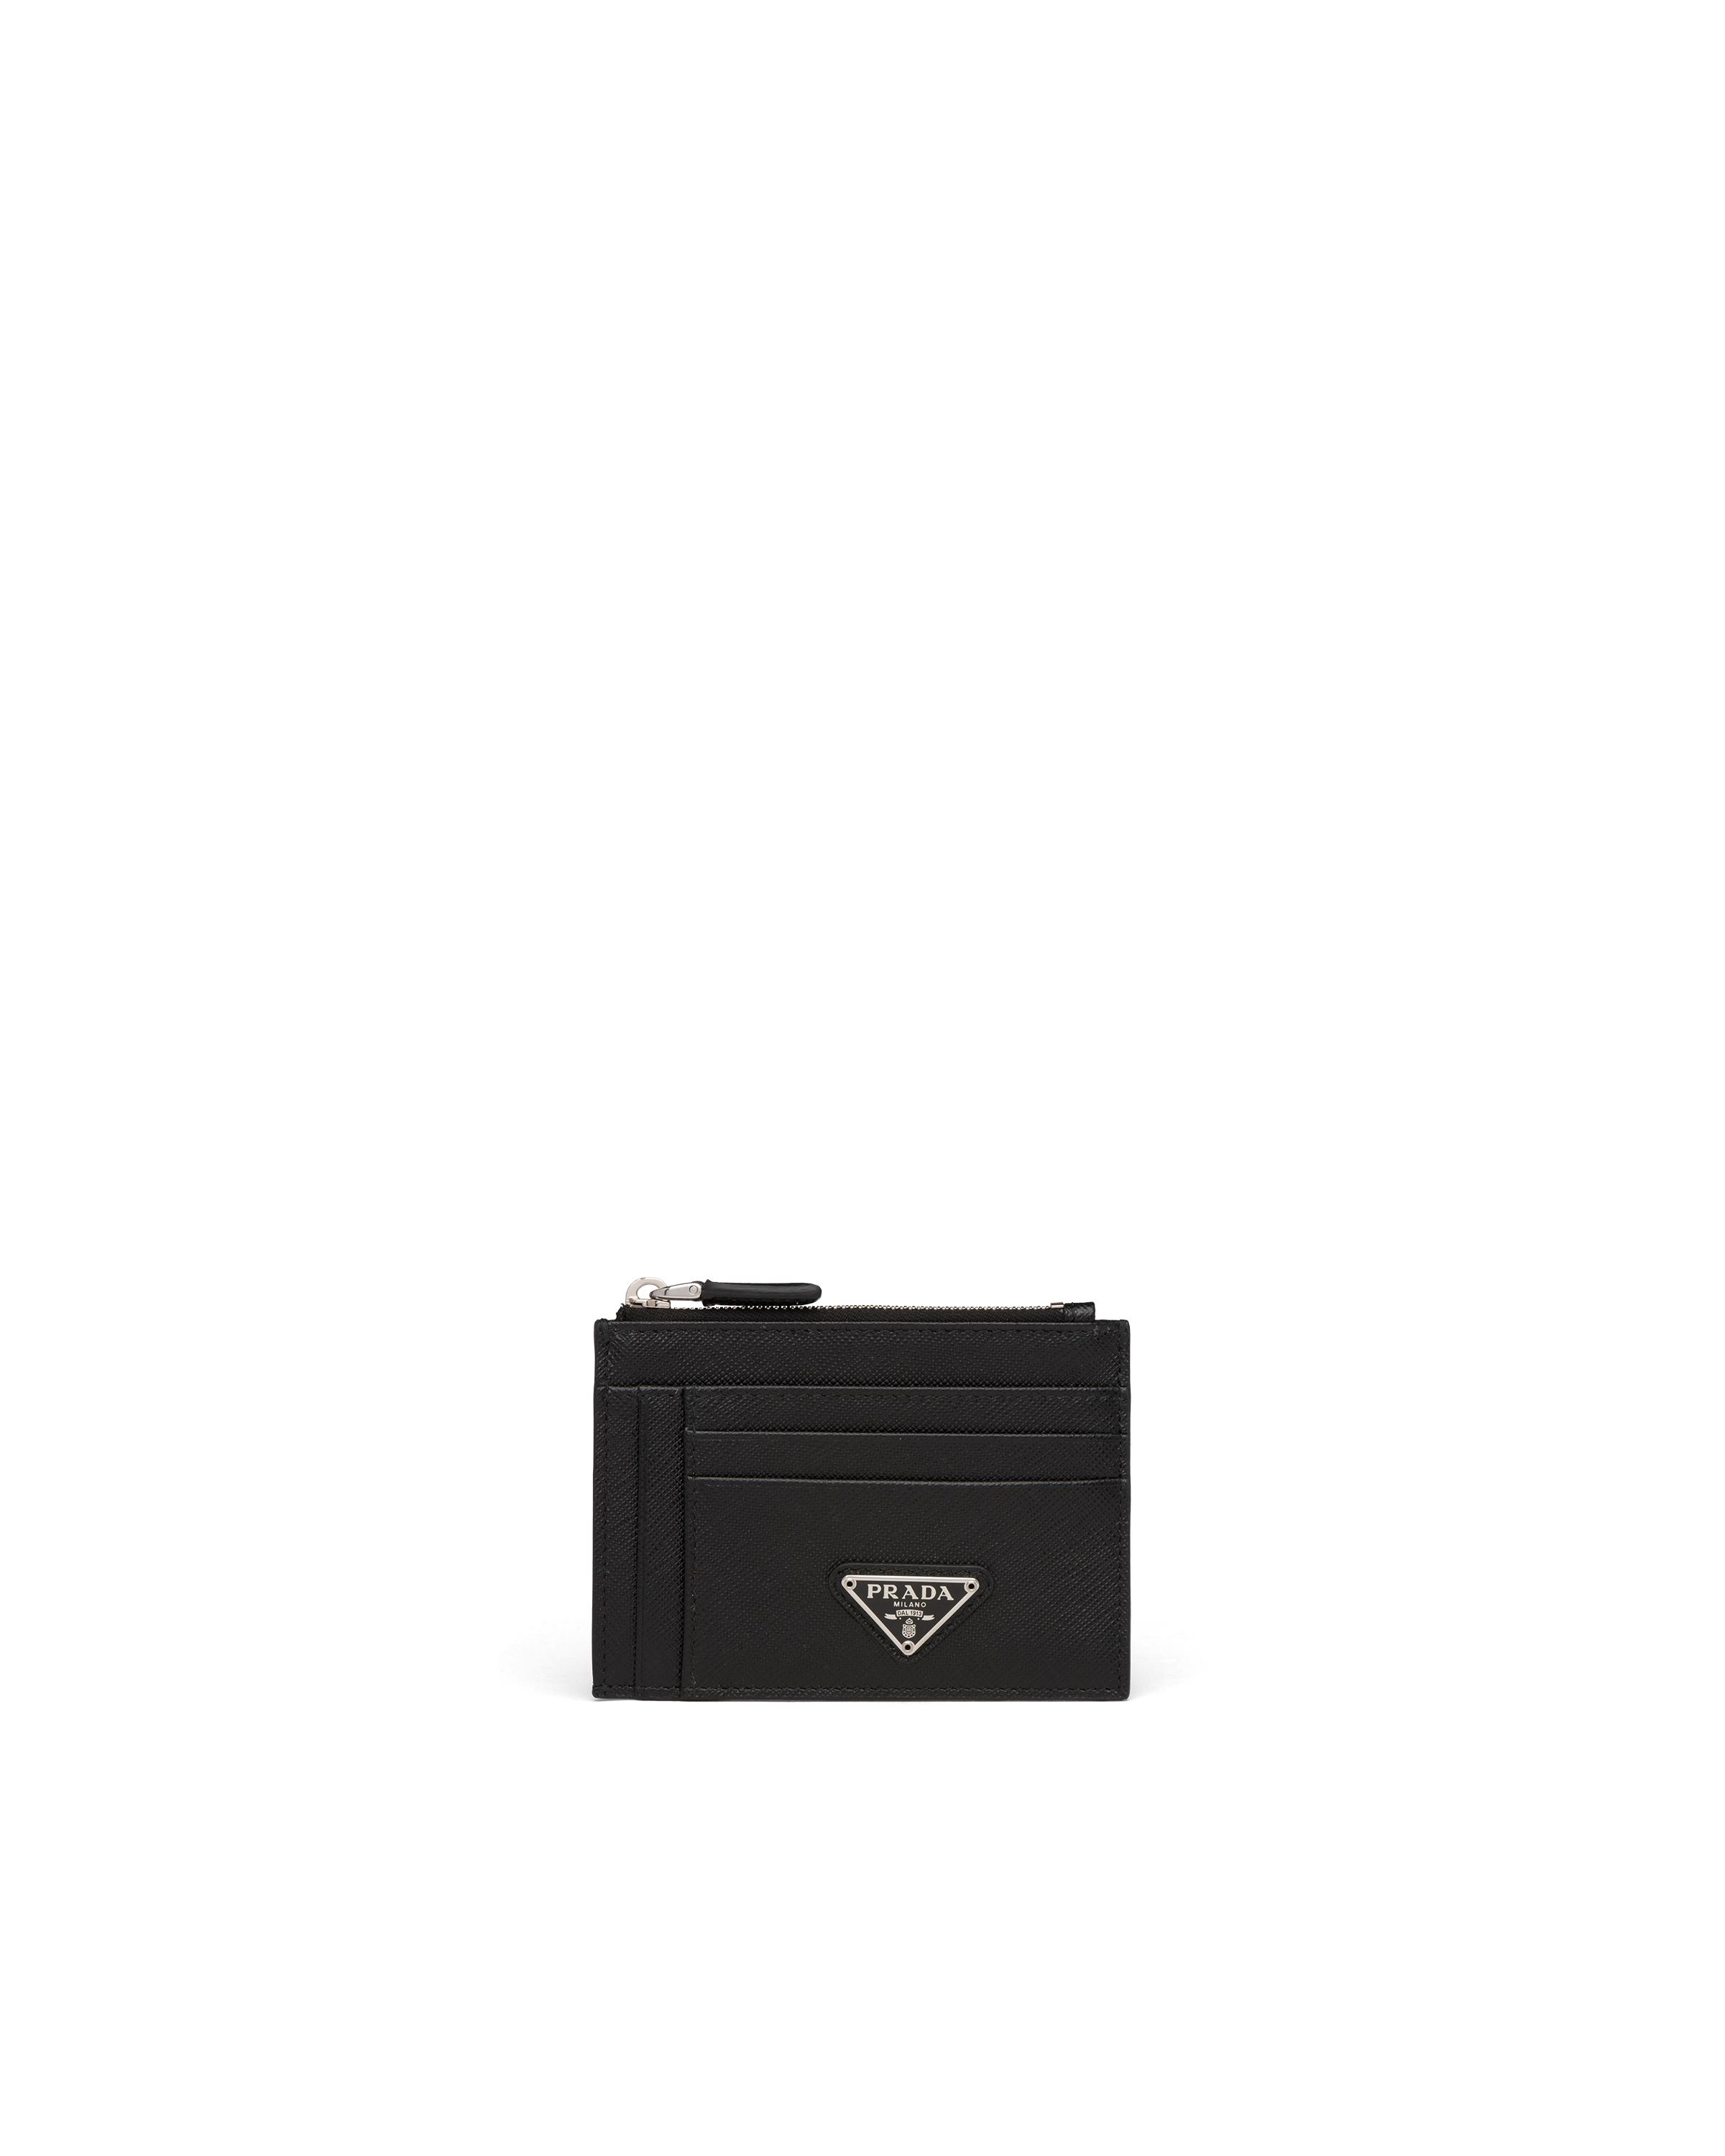 Prada Saffiano Leather Card Holder in Black for Men - Lyst